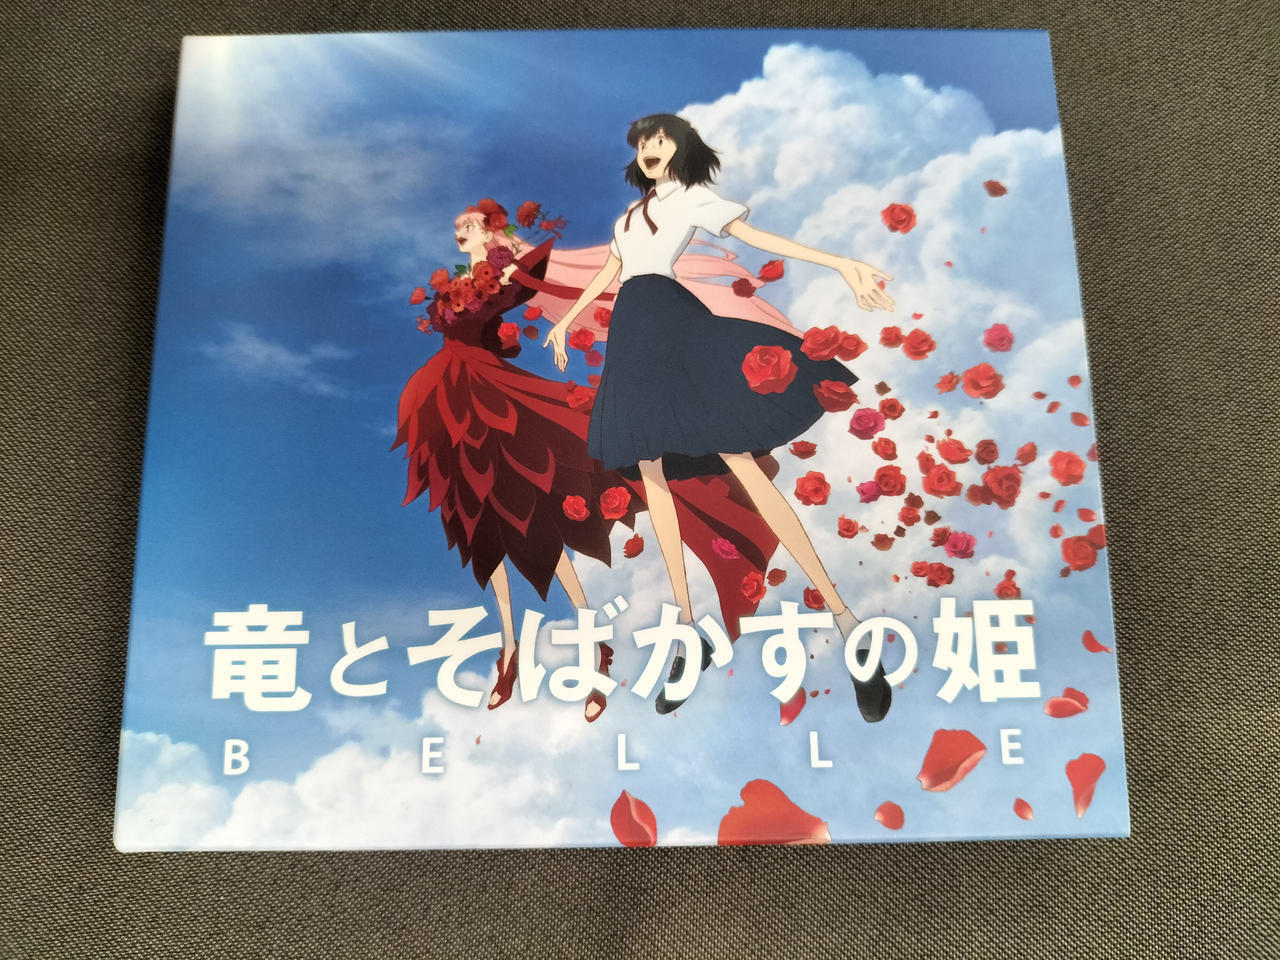 Anime Cd Bvcl-1173 The Dragon And Freckled Princess Original Soundtrack